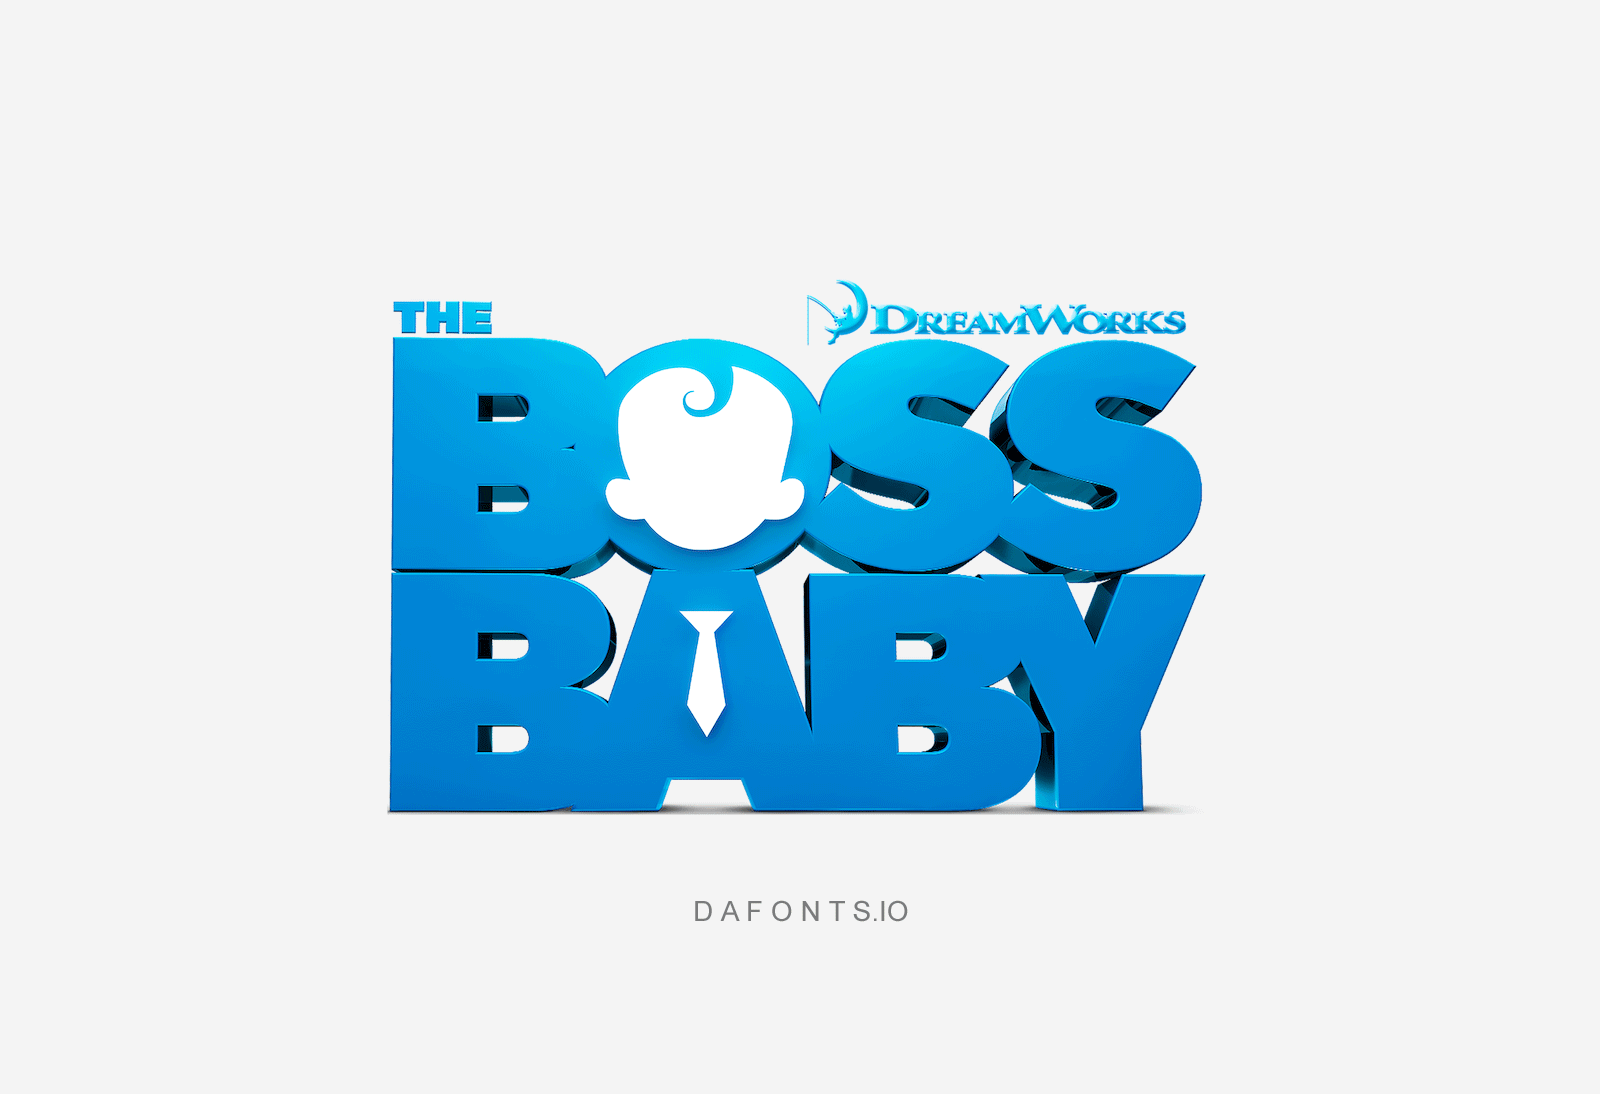 Boss Baby Font